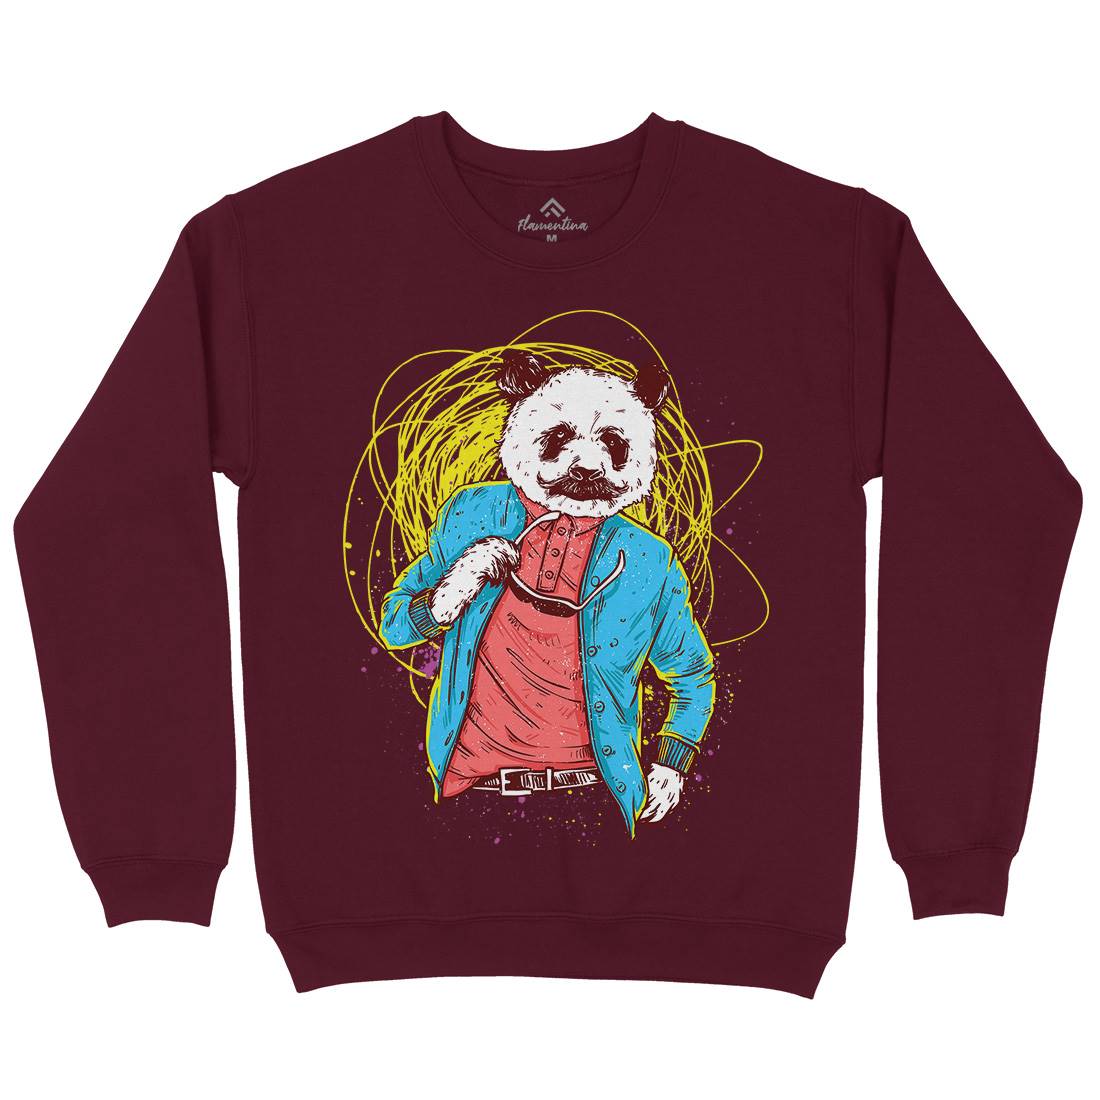 Panda Bear Kids Crew Neck Sweatshirt Animals C971